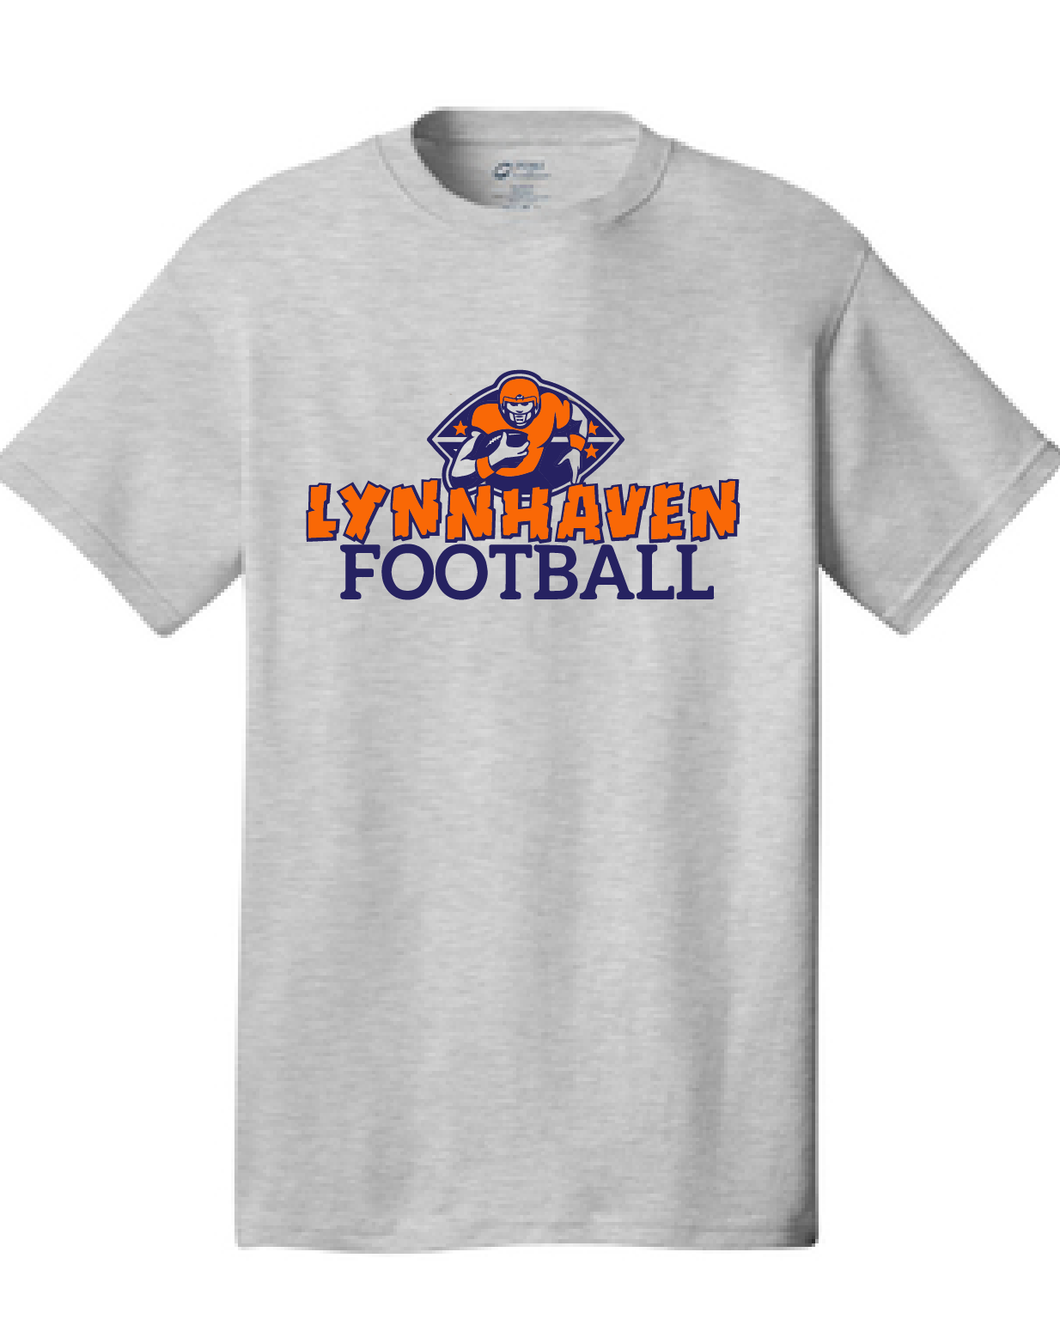 Cotton T-Shirt / Ash Gray / Lynnhaven Football